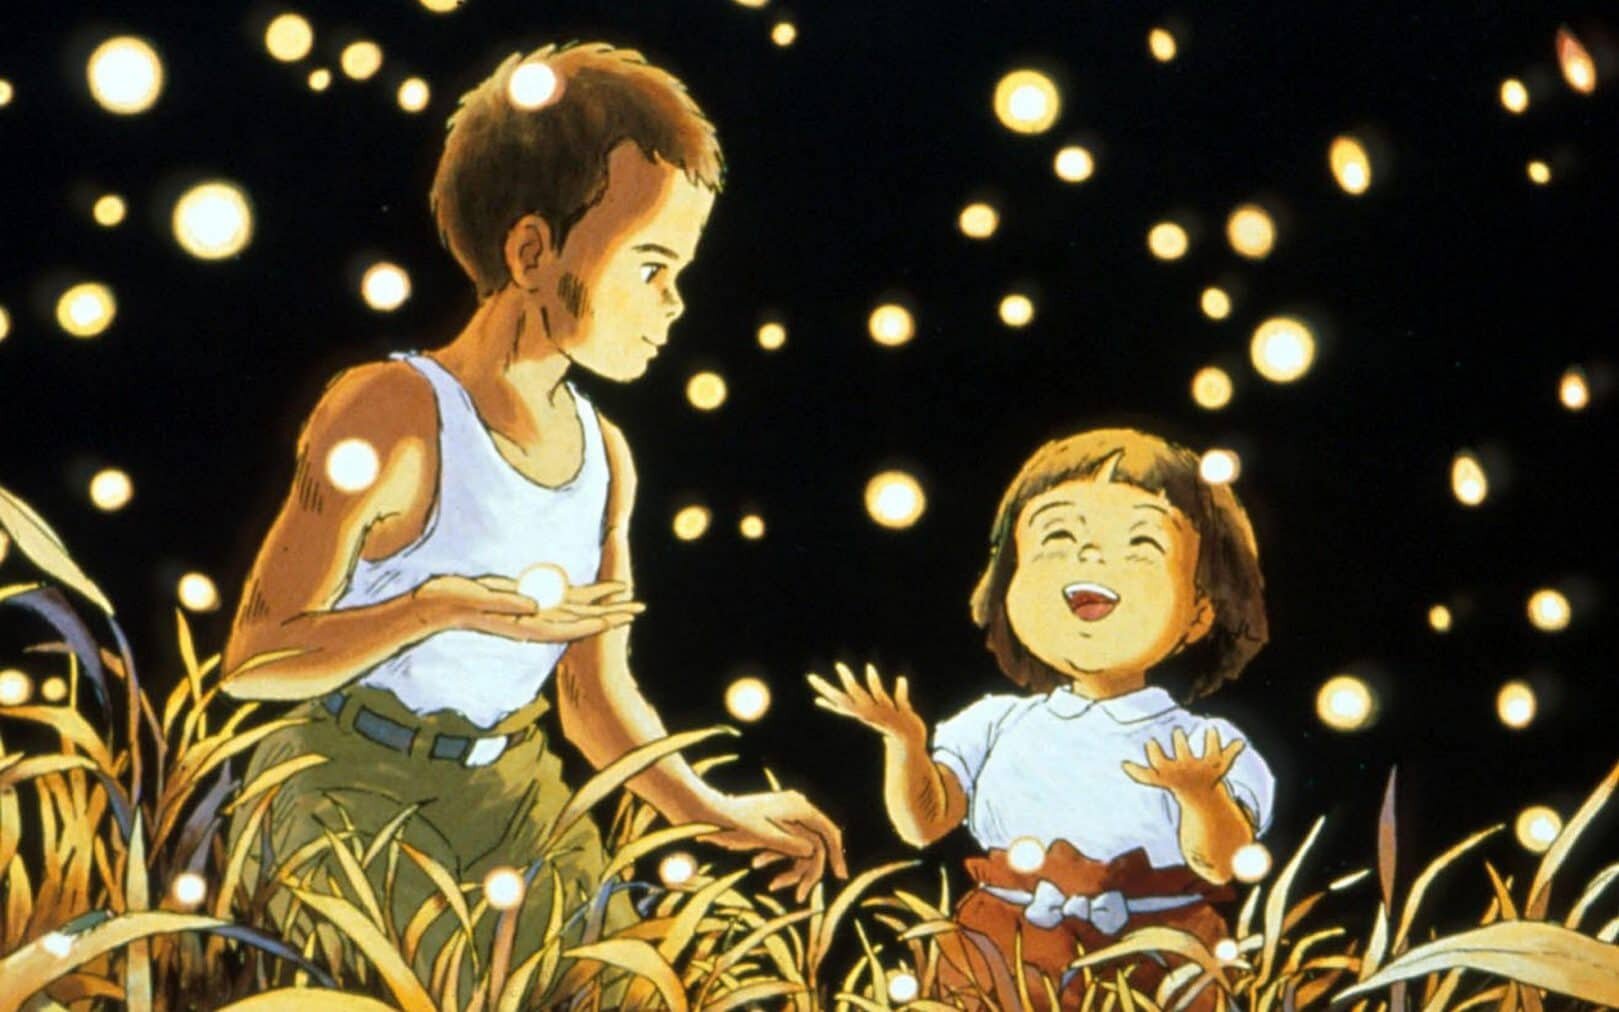 Grave Of The Fireflies (Blu-ray, 2012) story of human spirit anime STUDIO  GHIBLI